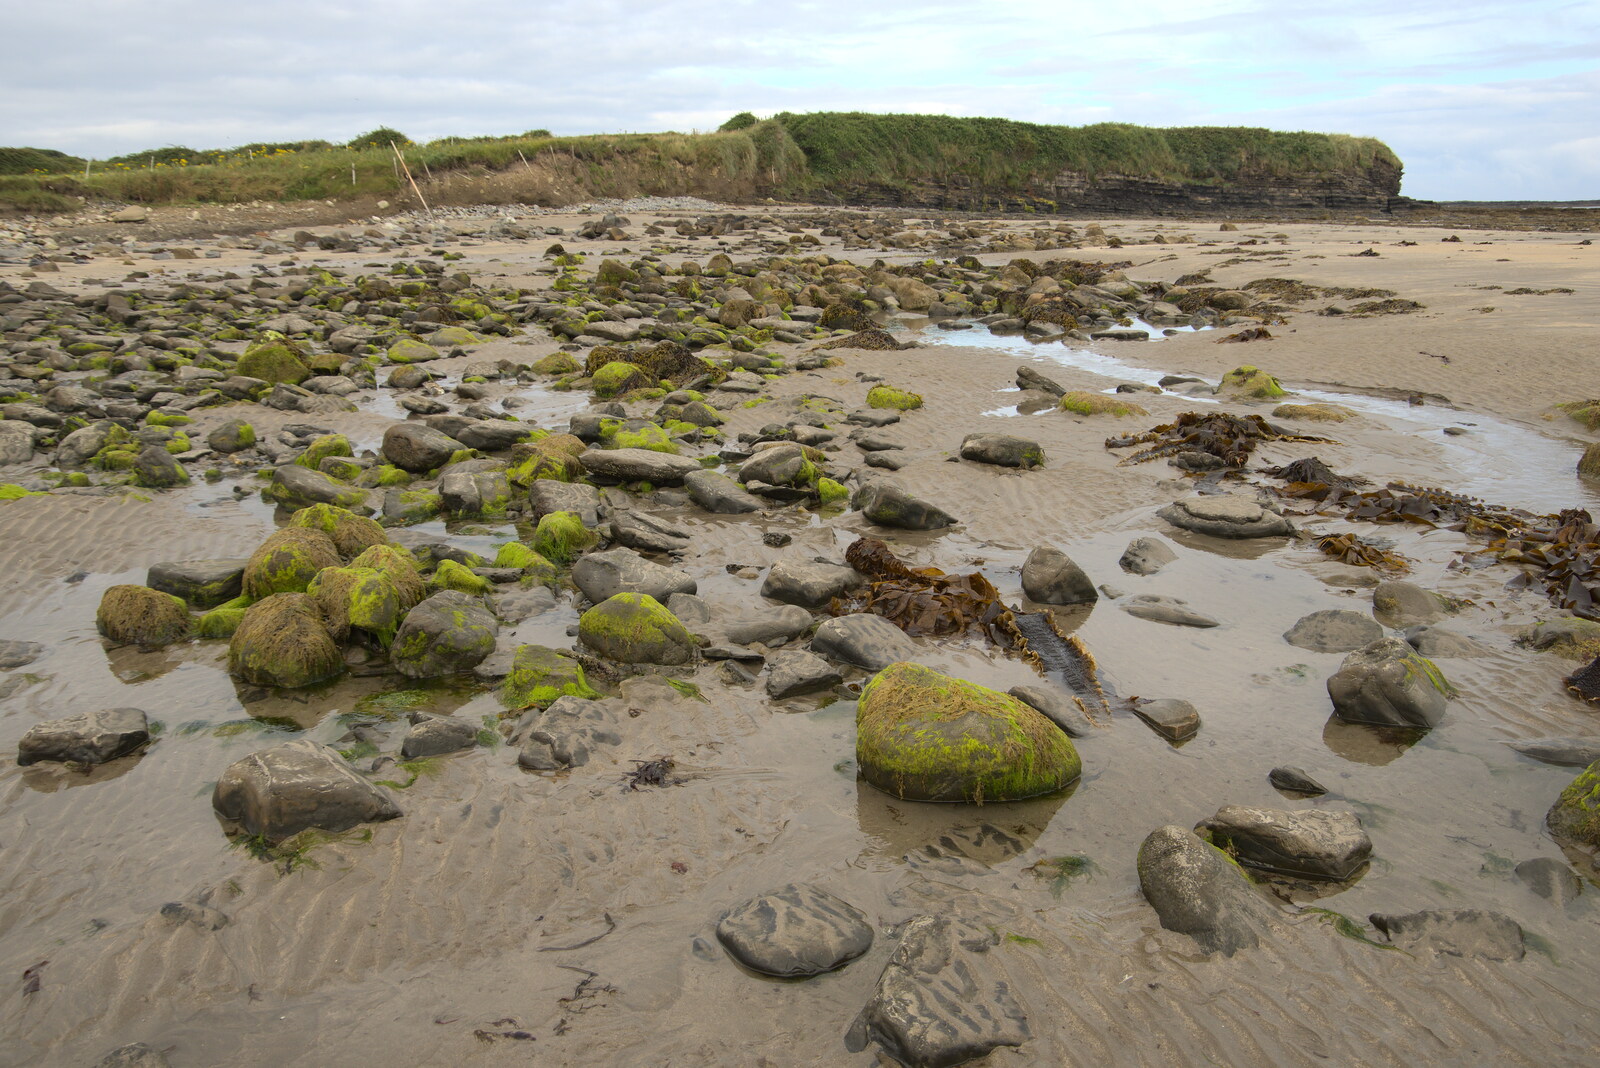 Pints of Guinness and Streedagh Beach, Grange and Sligo, Ireland - 9th August 2021: Green-covered rocks